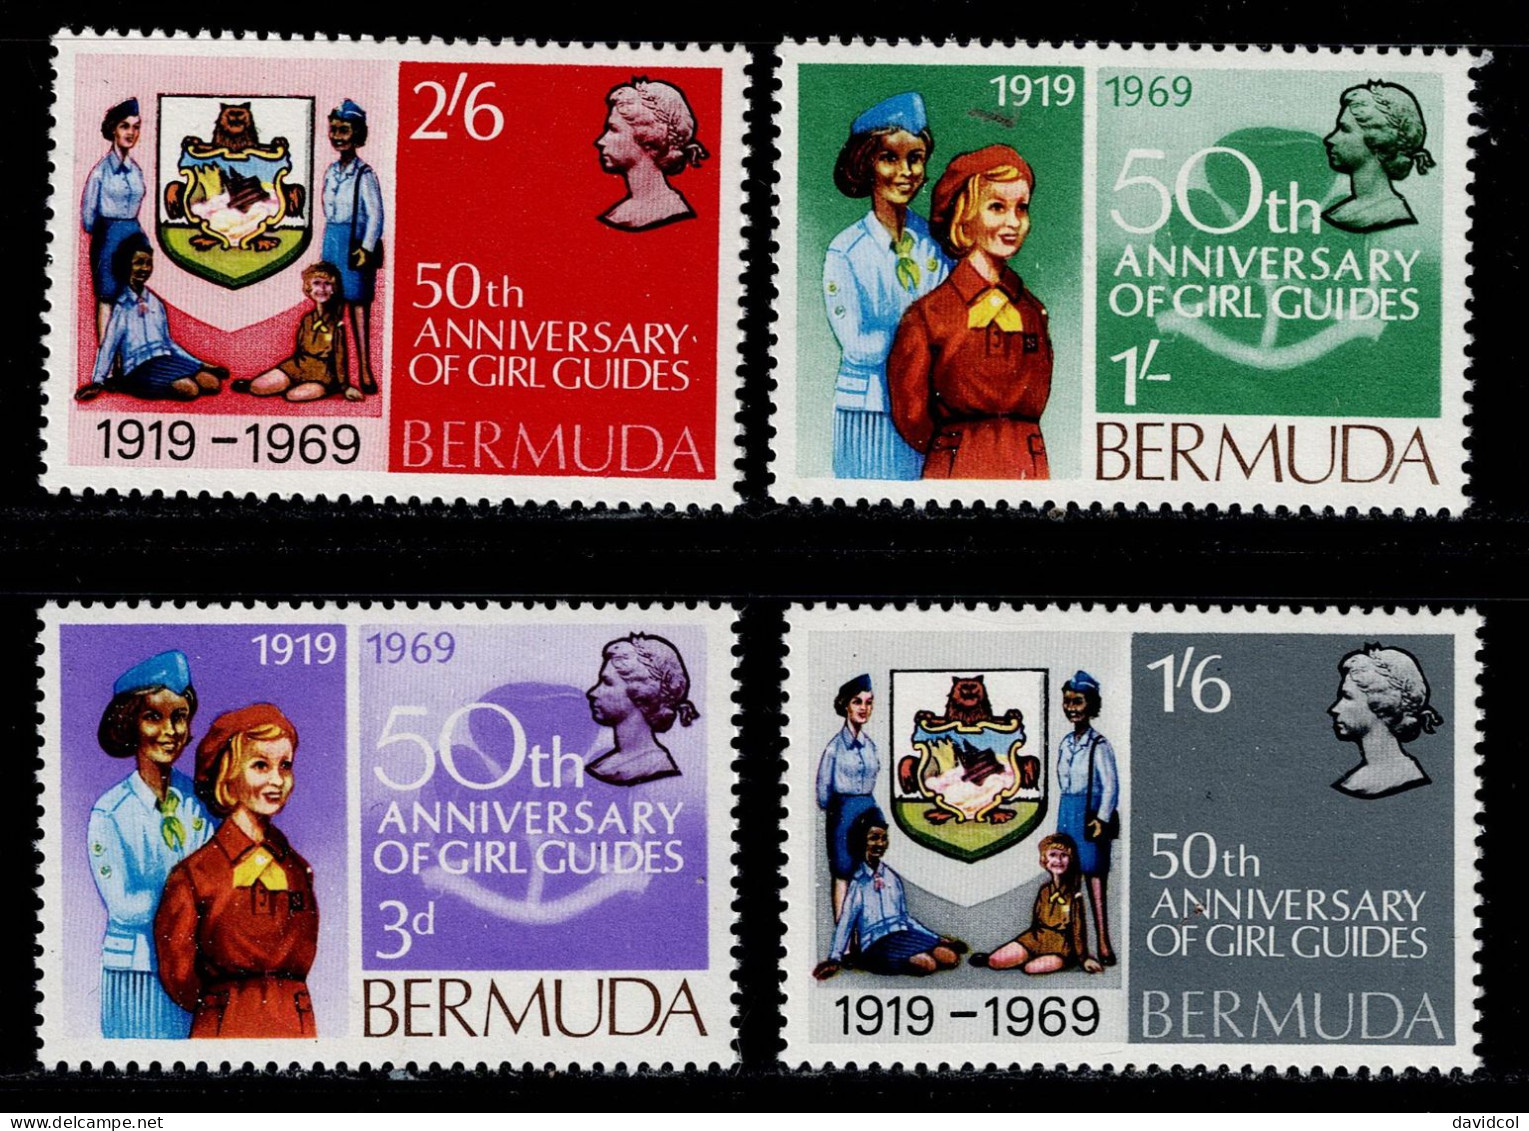 BER-02- BERMUDA - 1969 - MNH -SCOUTS- 50TH ANNIVERSARY OF GIRL GUIDES - Bermuda